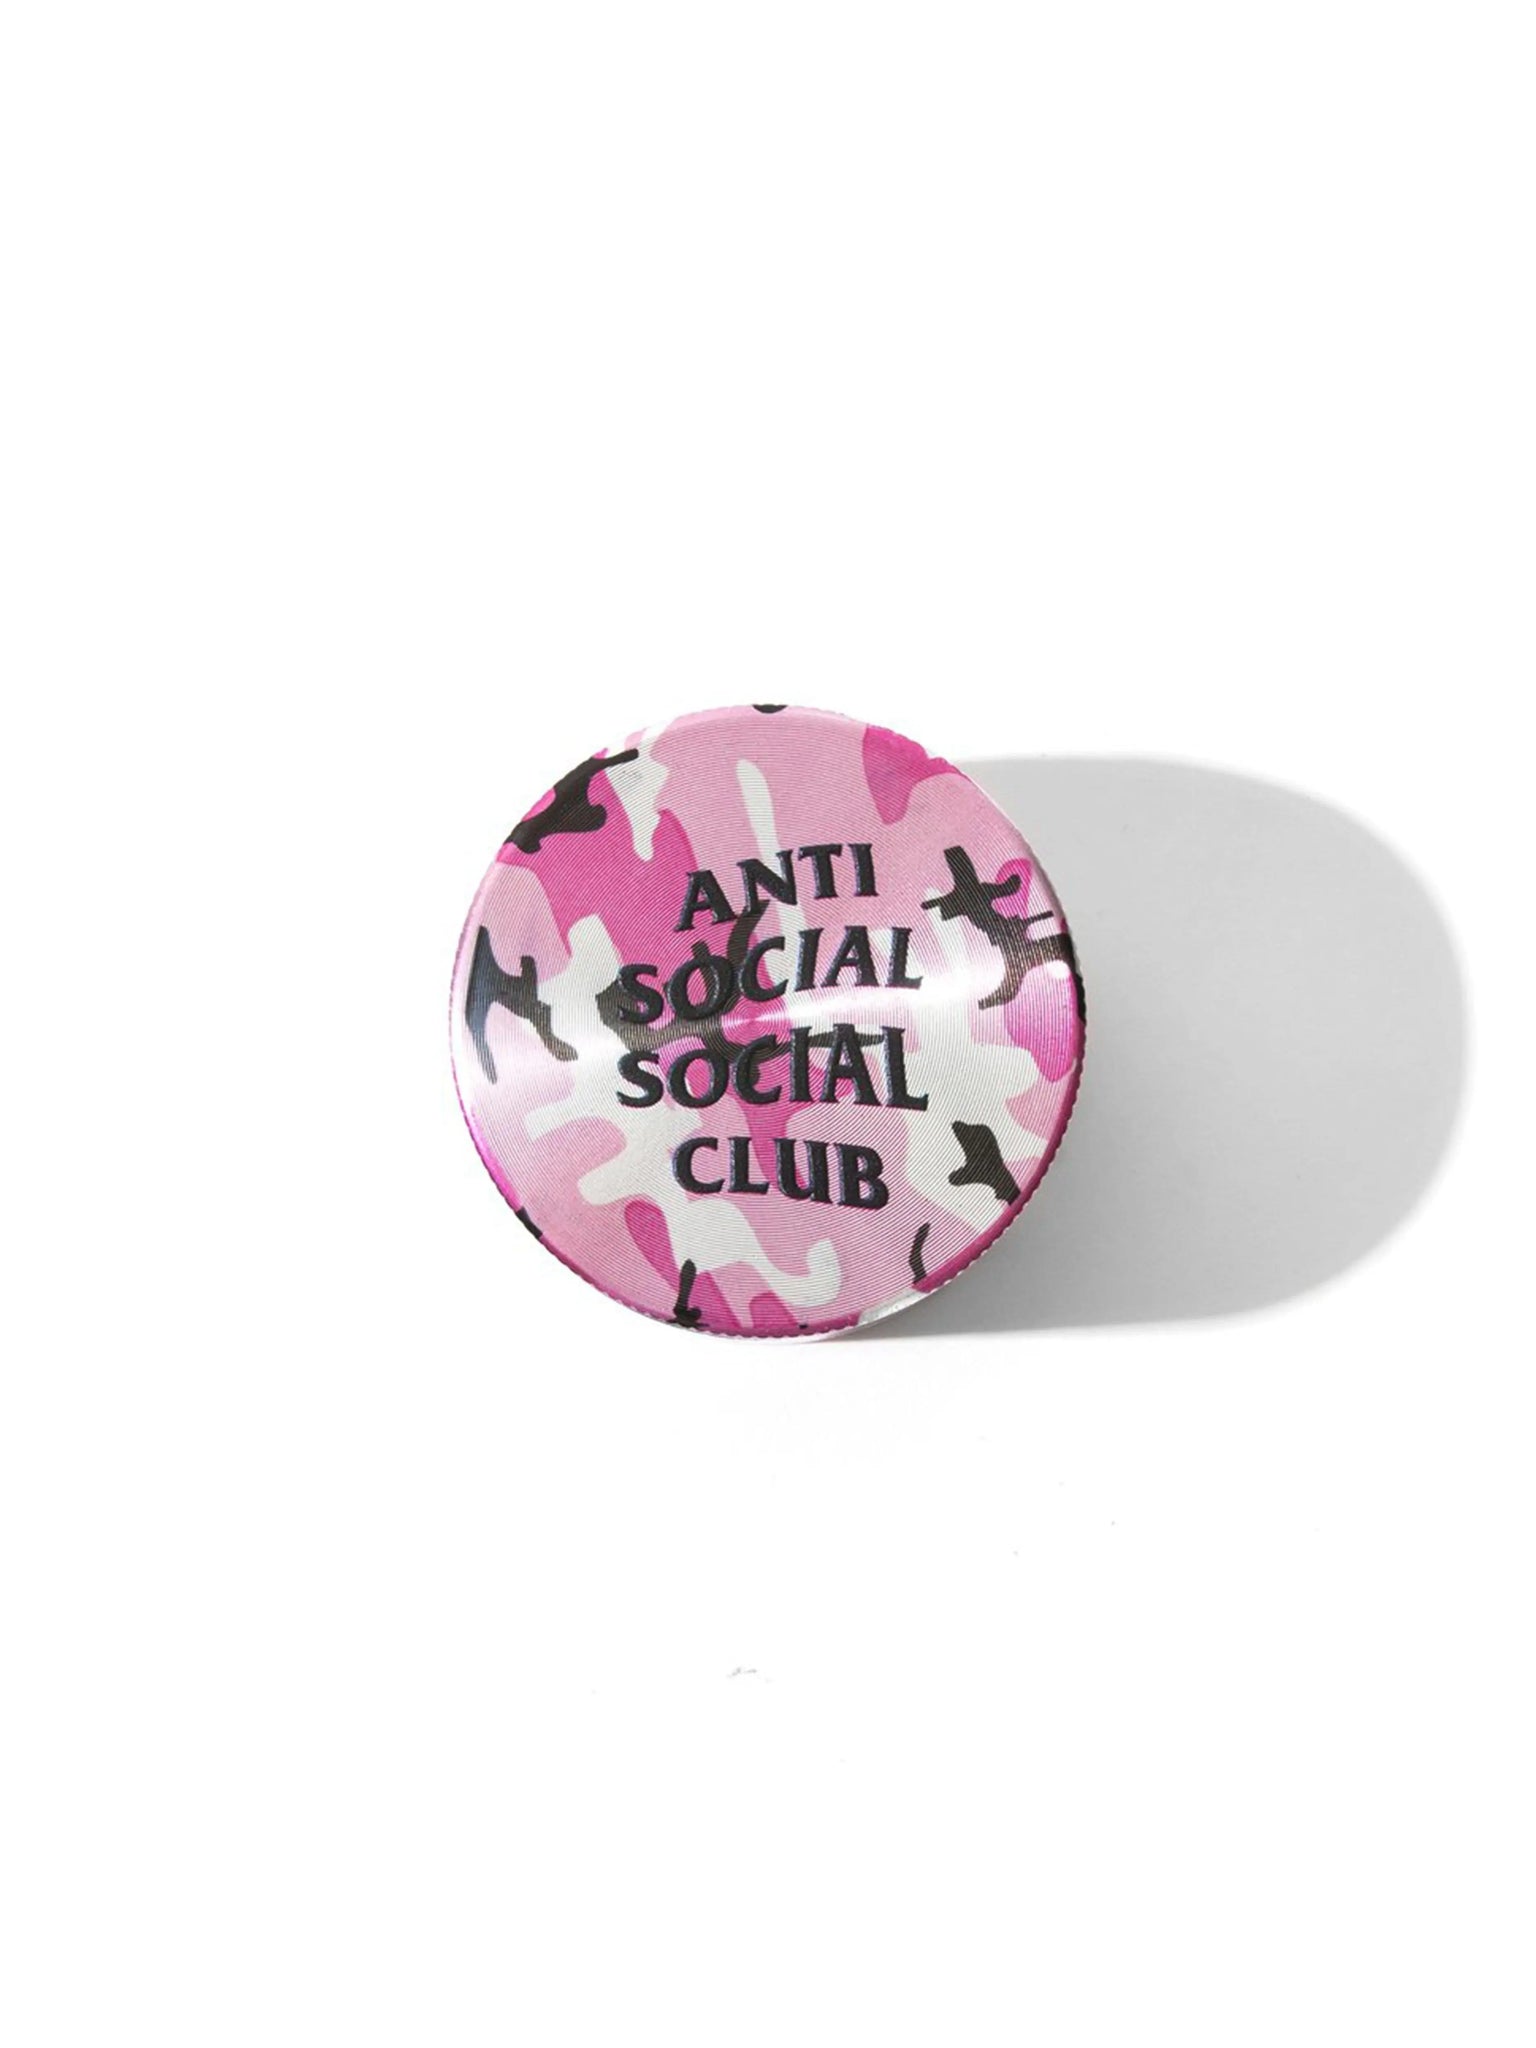 Anti Social Social Club Grinder 'Coffee Table' Prior